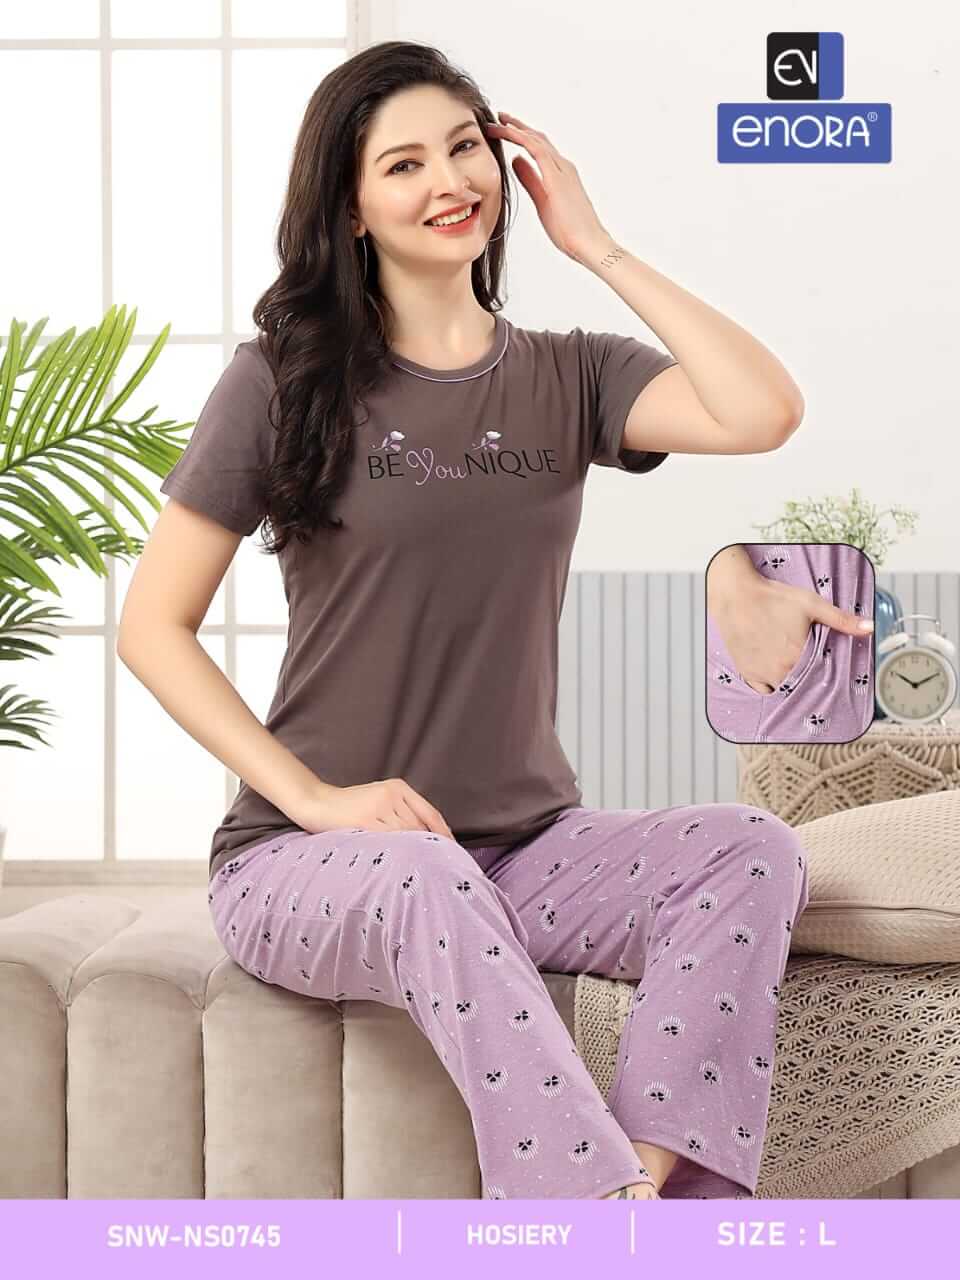 Enora Tshirt With Printed Payjama Night Dress Catalog collection 6